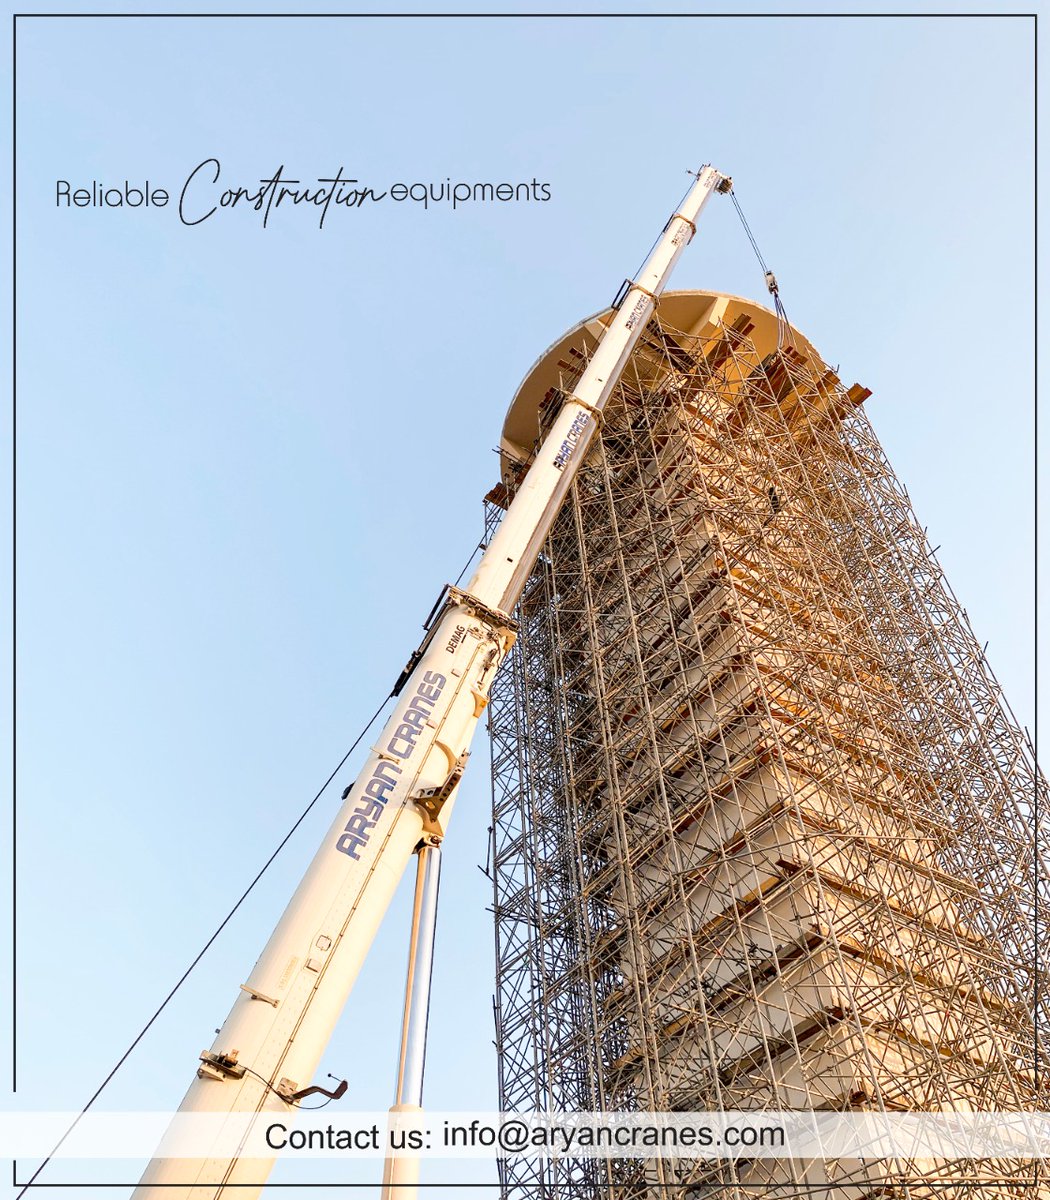 'Reliable Construction equipments'
Email: Info@aryancranes.com

#MobileCrane #Doha #Qatar #QatarProjects #QatarConstruction #QatarEquipment #Qatarliving #DohaQatar #AllTerrainCrane #TruckCrane #RTCrane #QatarPetroleum #QatarGas #RasGas